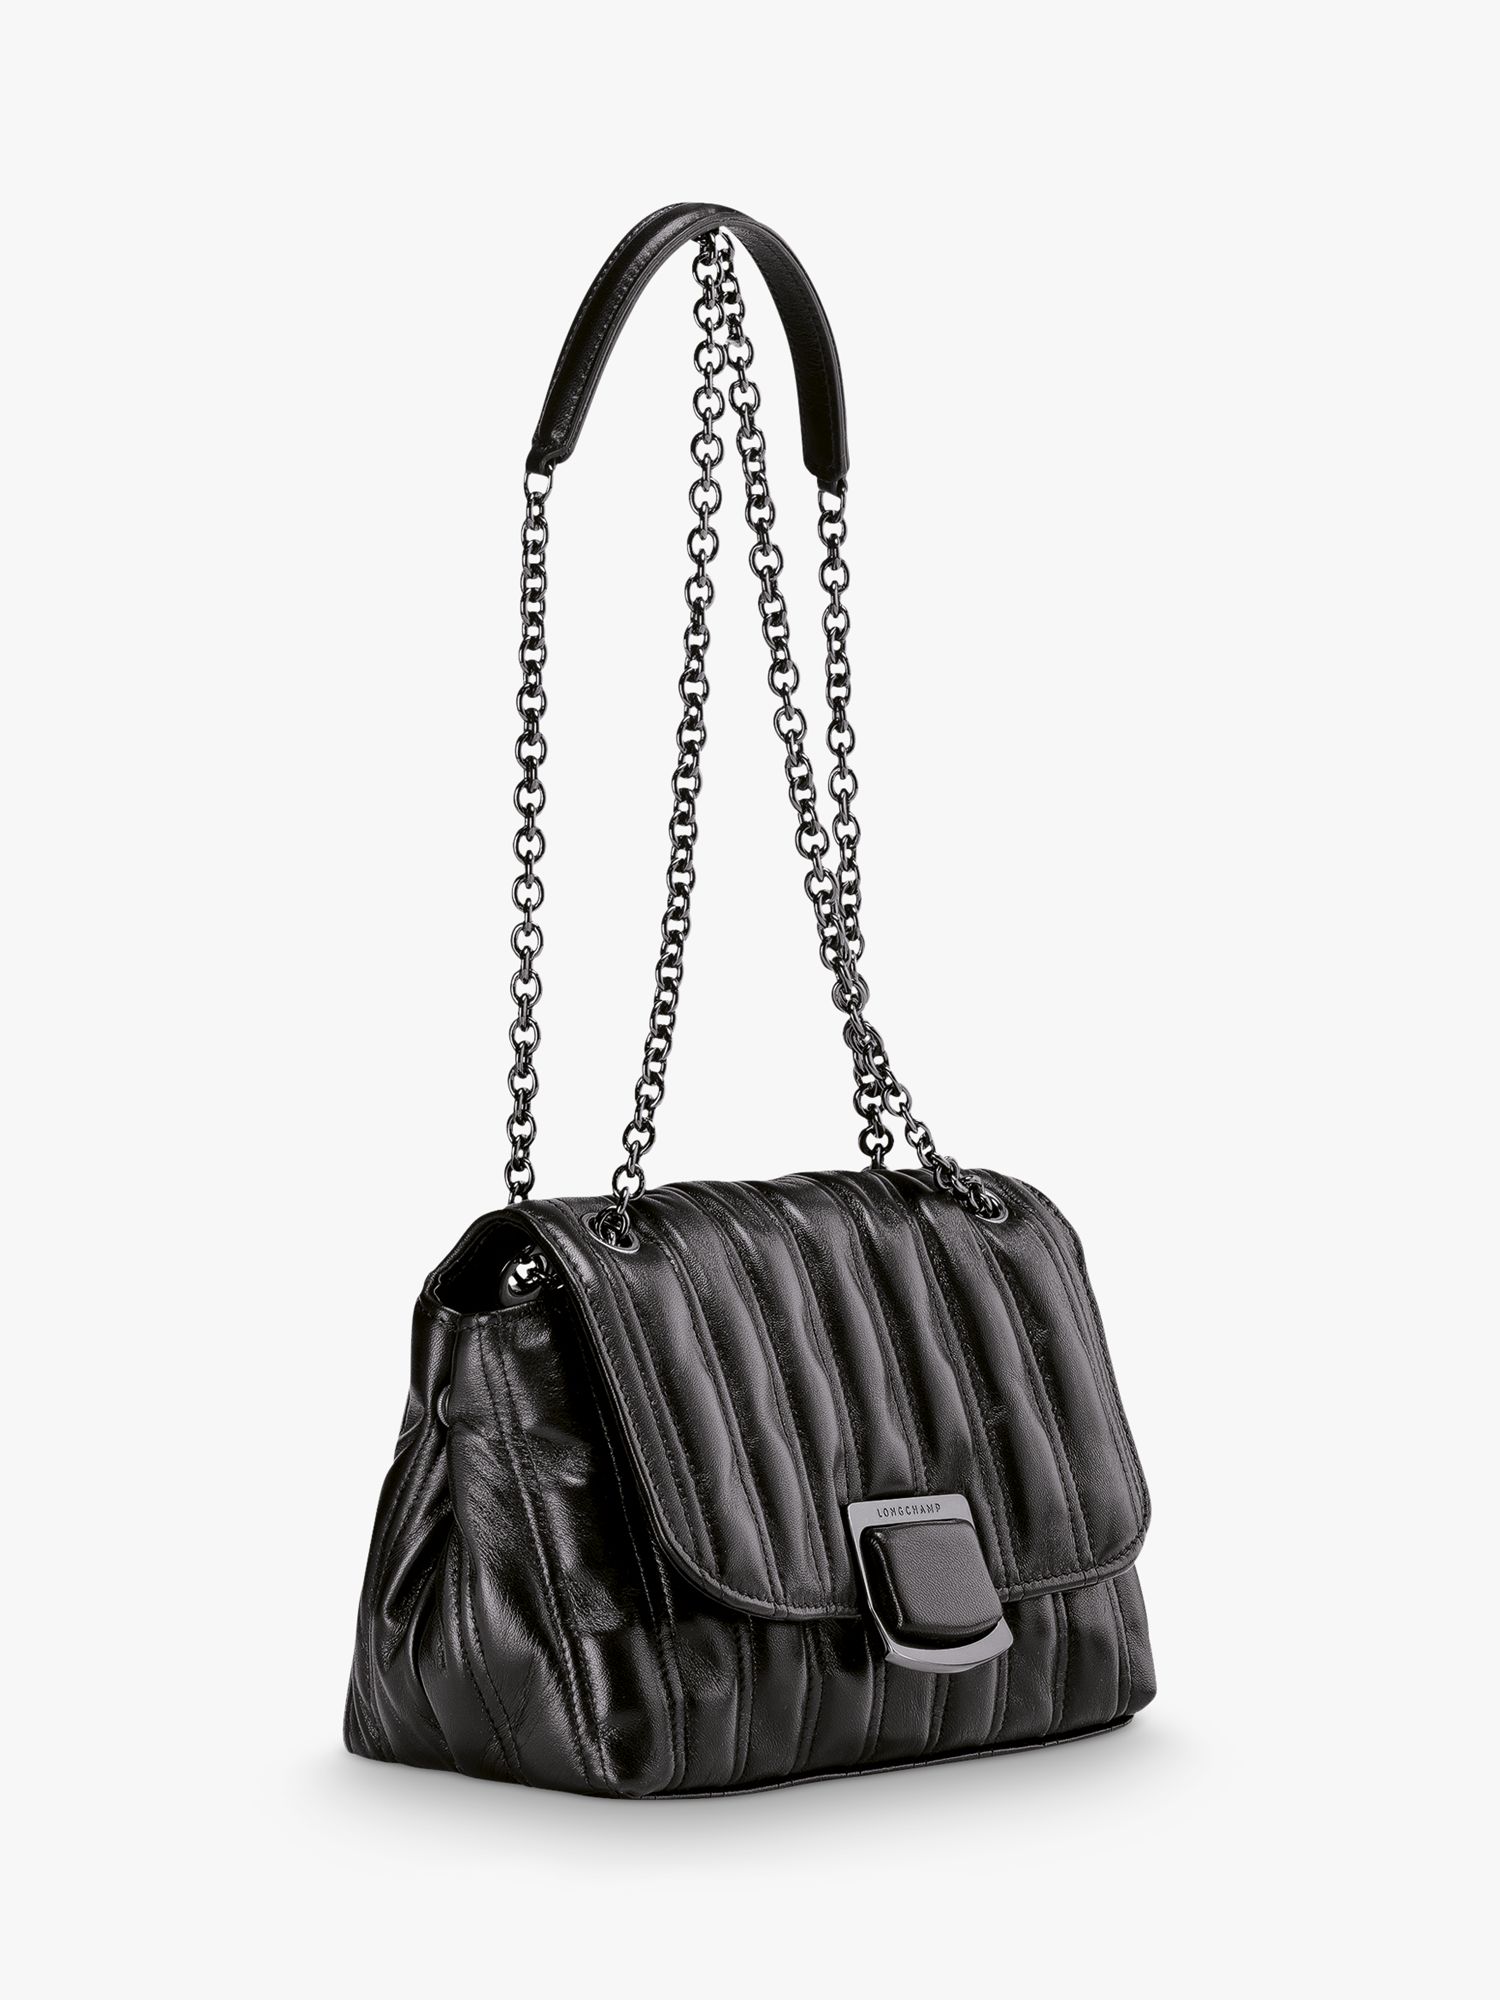 Longchamp Brioche Leather Cross Body Bag, Black at John Lewis & Partners